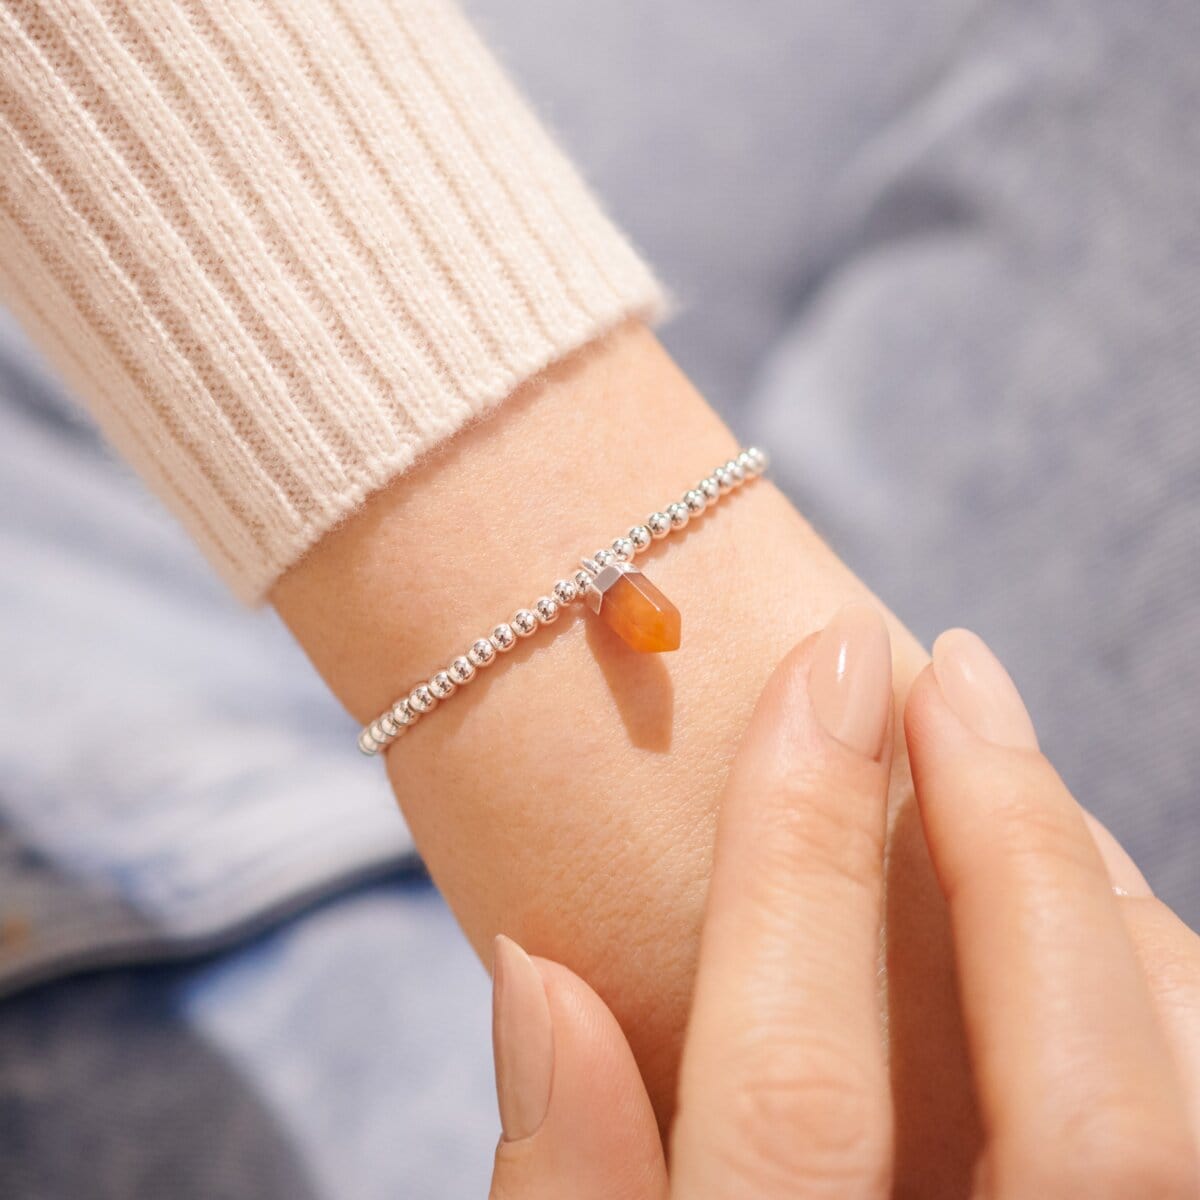 Joma Jewellery Bracelets Joma Jewellery Affirmation Bracelet - A little Energy - Amber